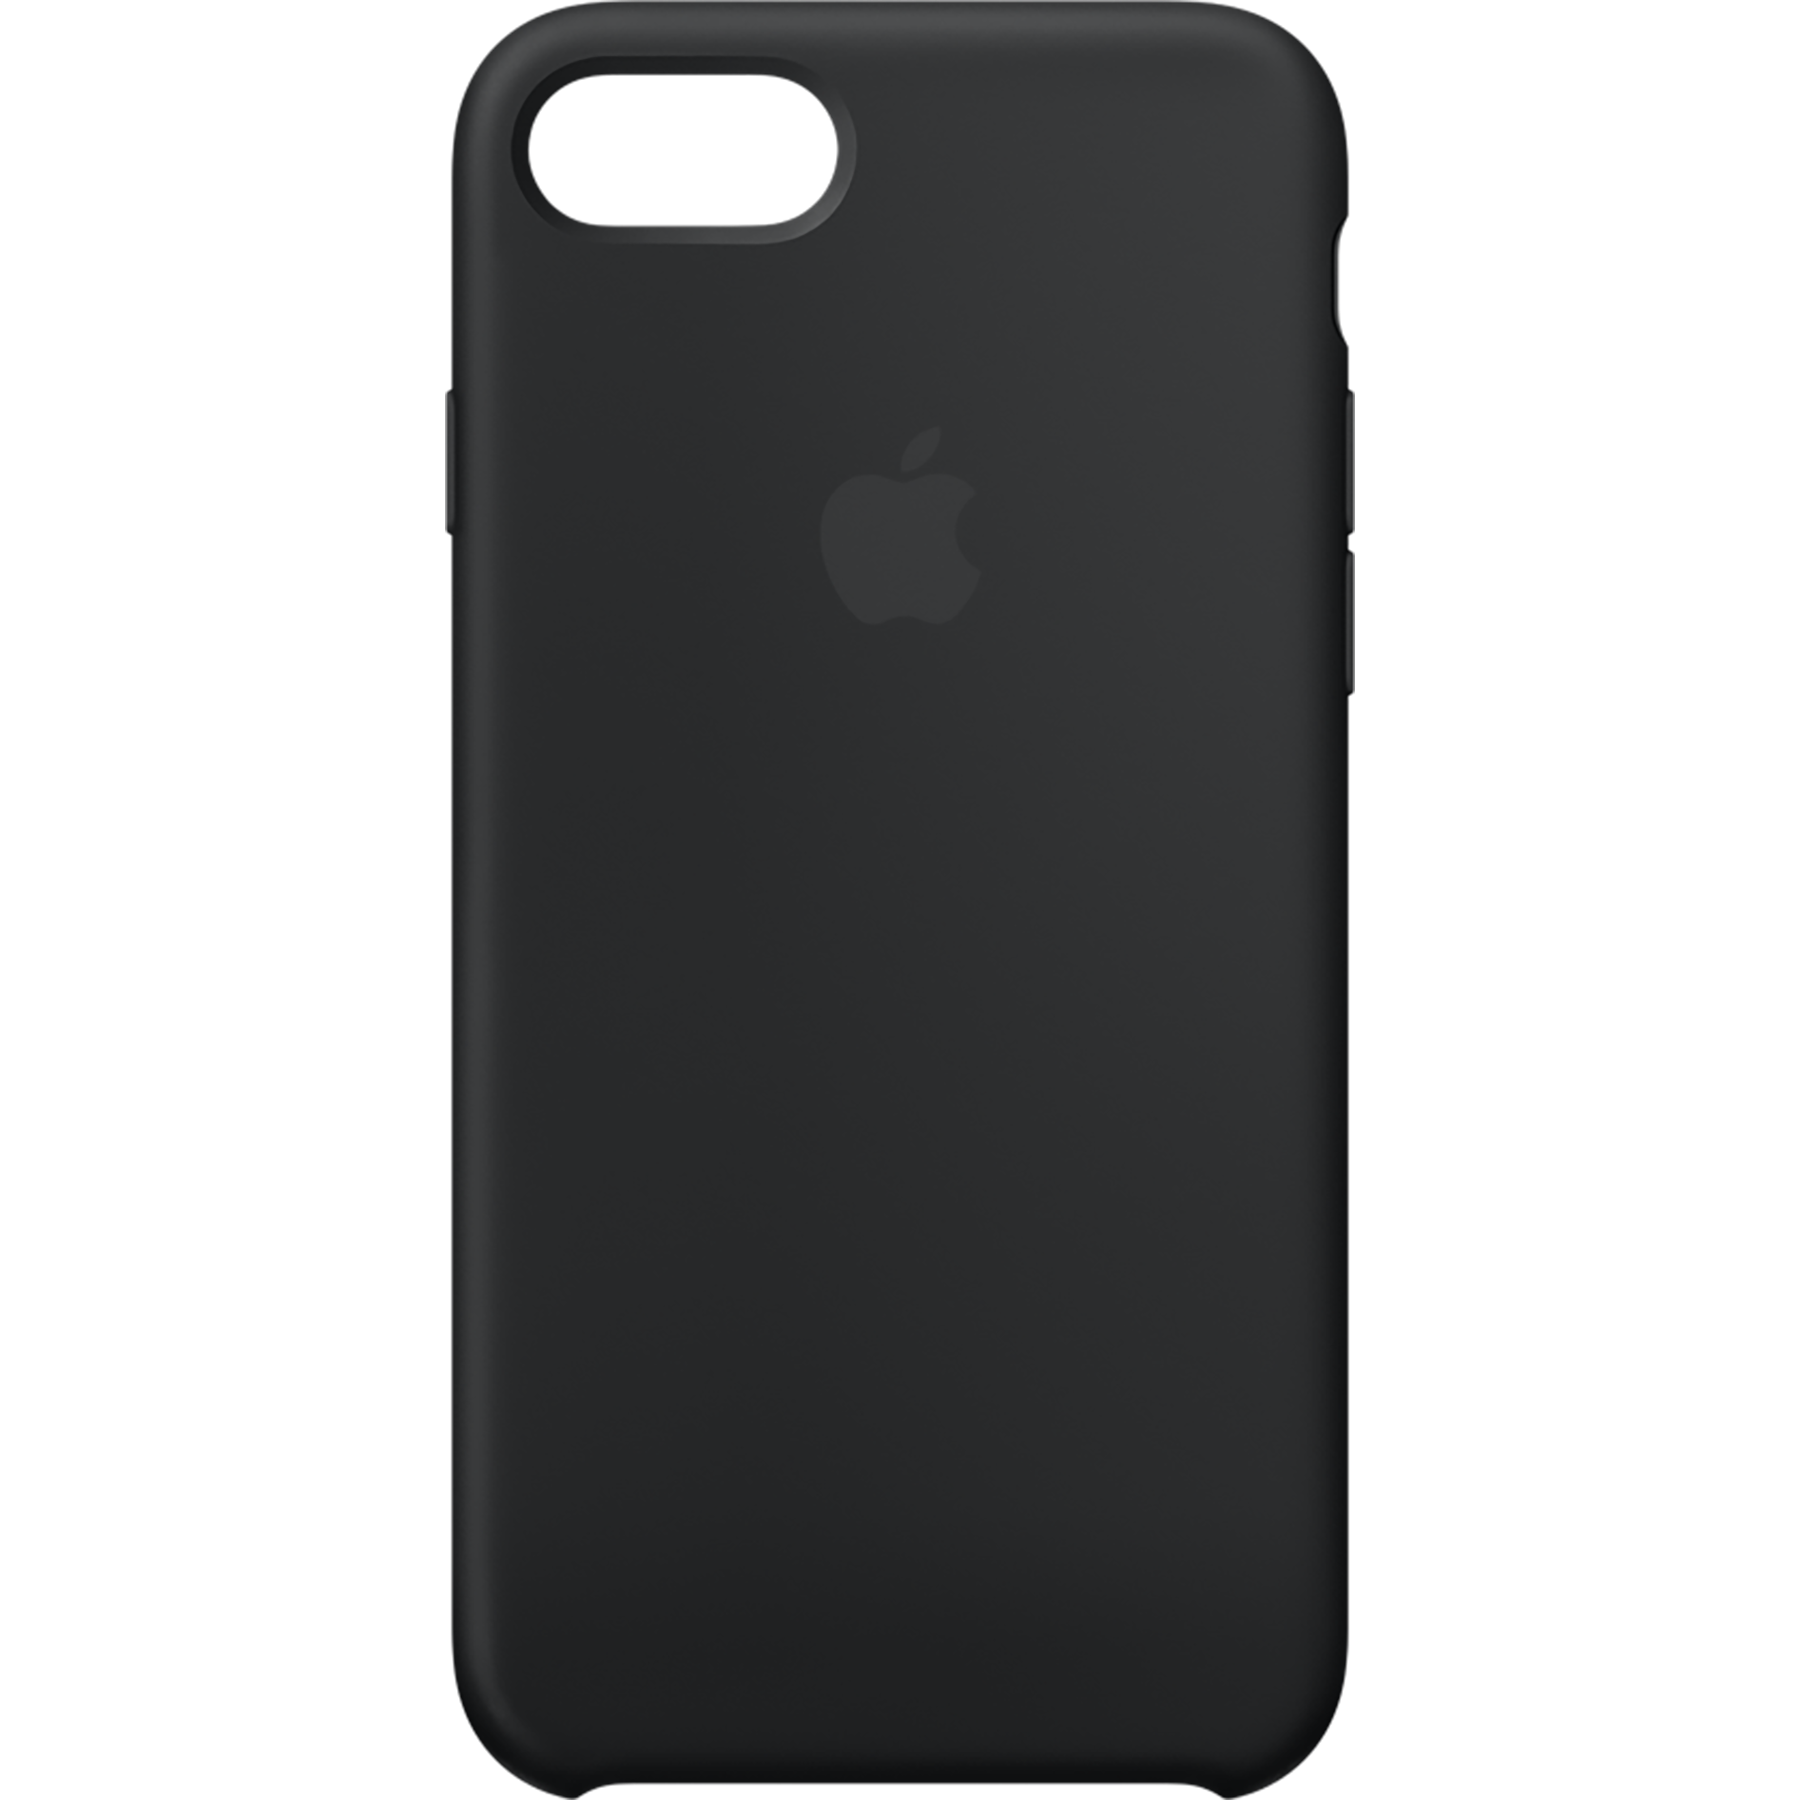 New Iphone 7 7 Plus Cases Accessories Carphone Warehouse